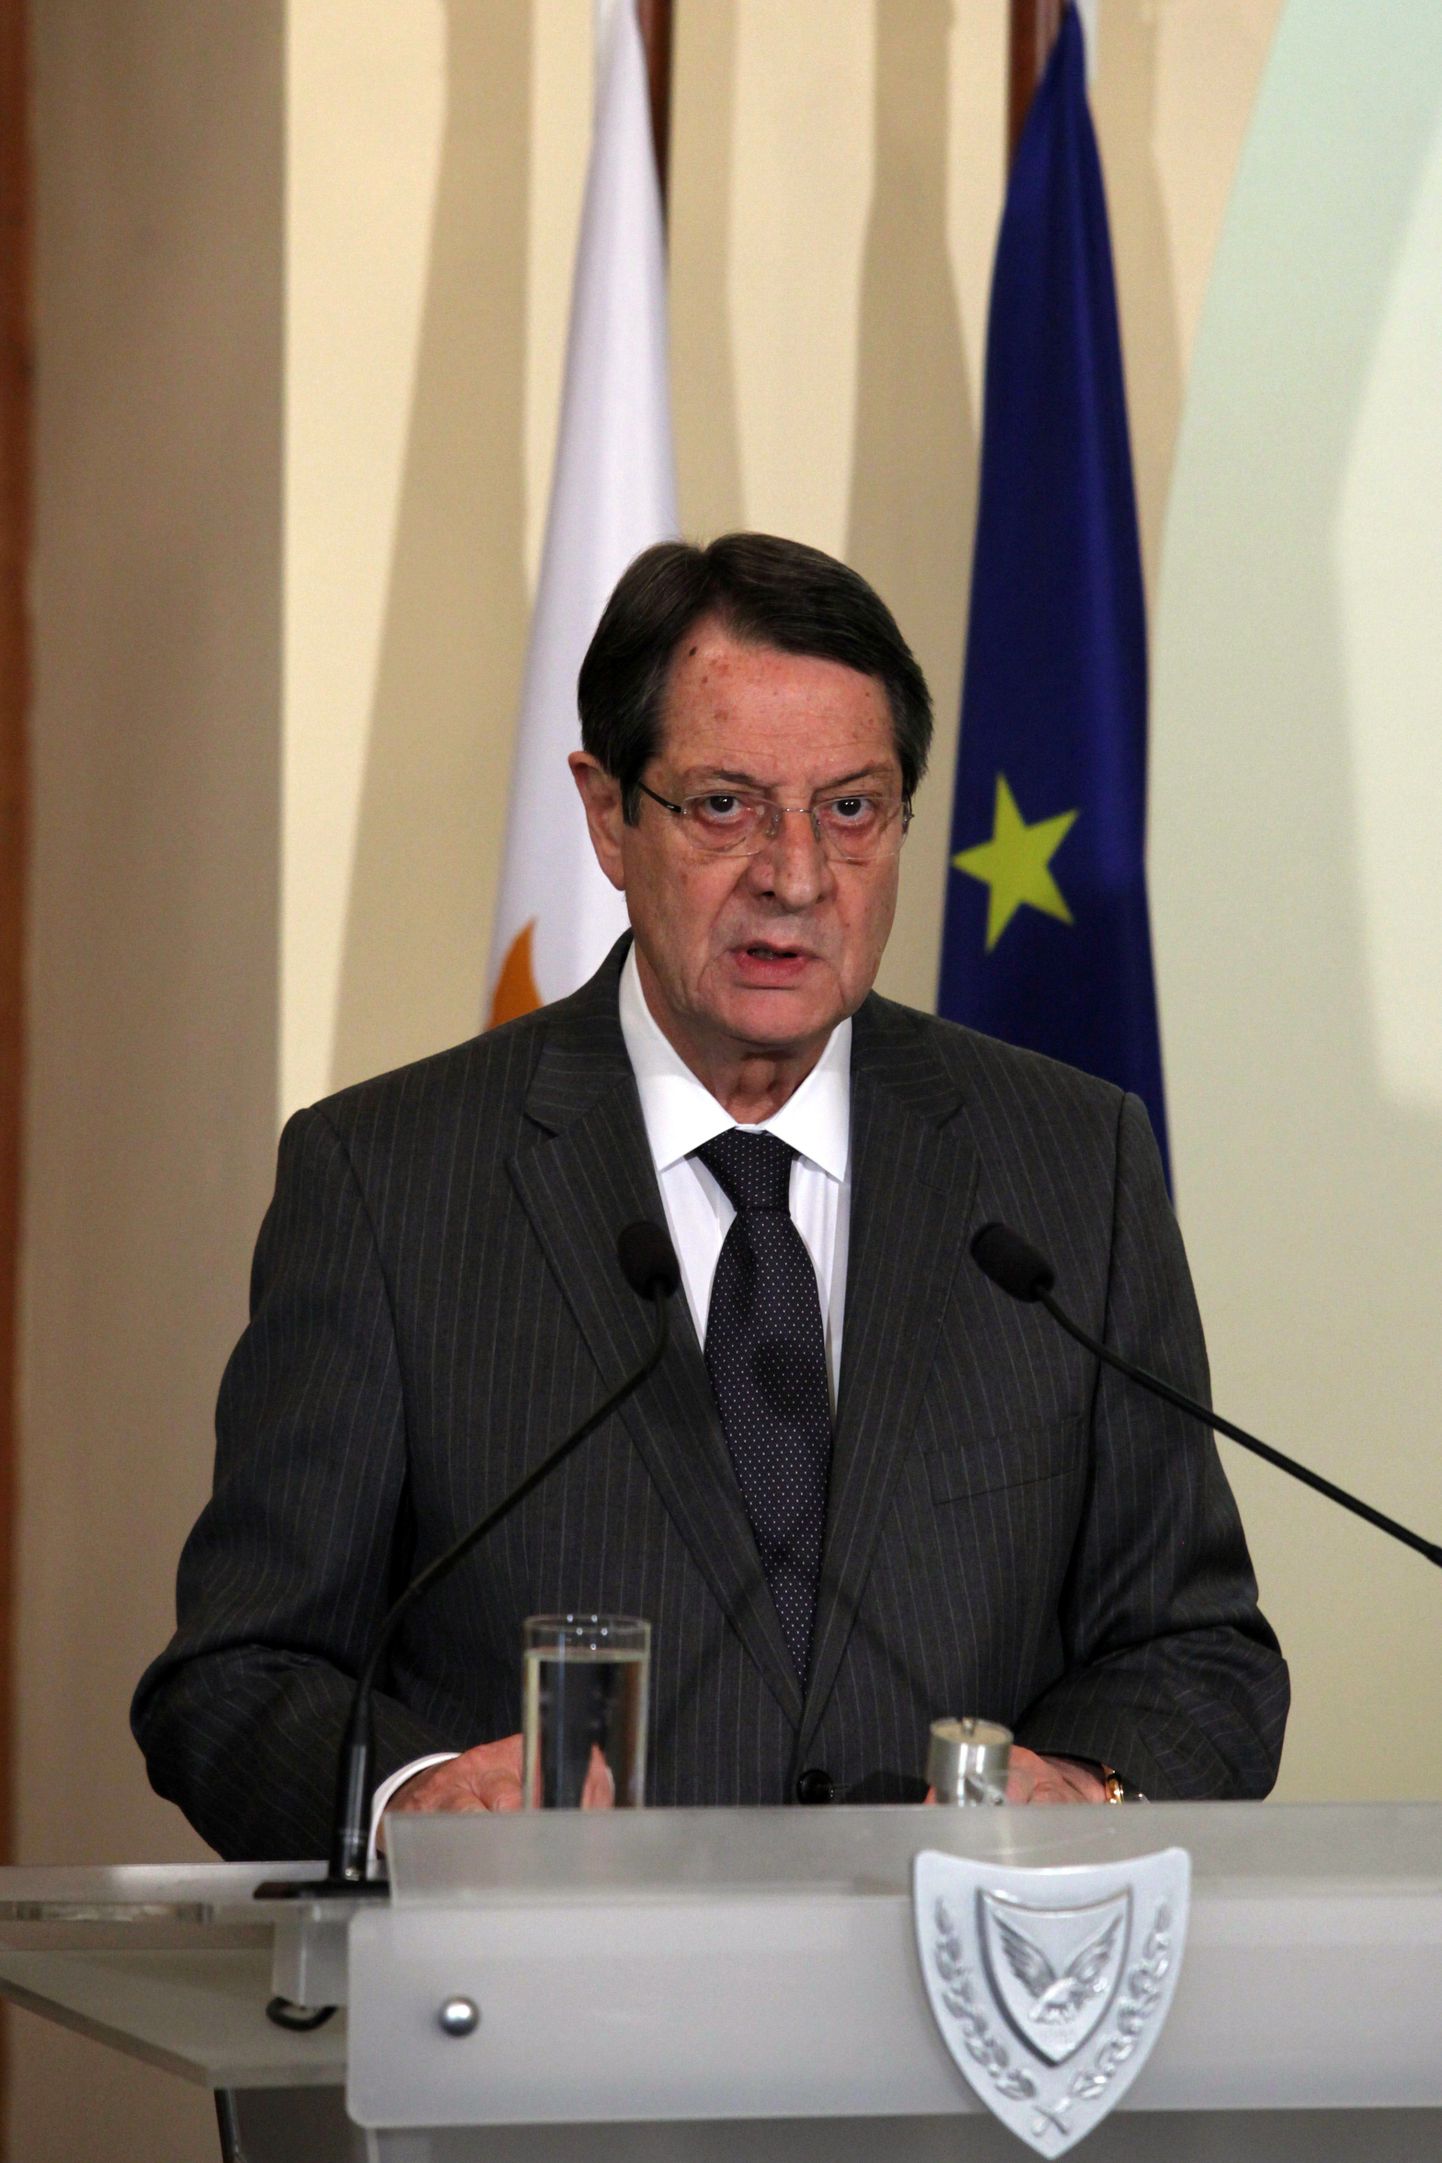 Küprose president Nicos Anastasiades